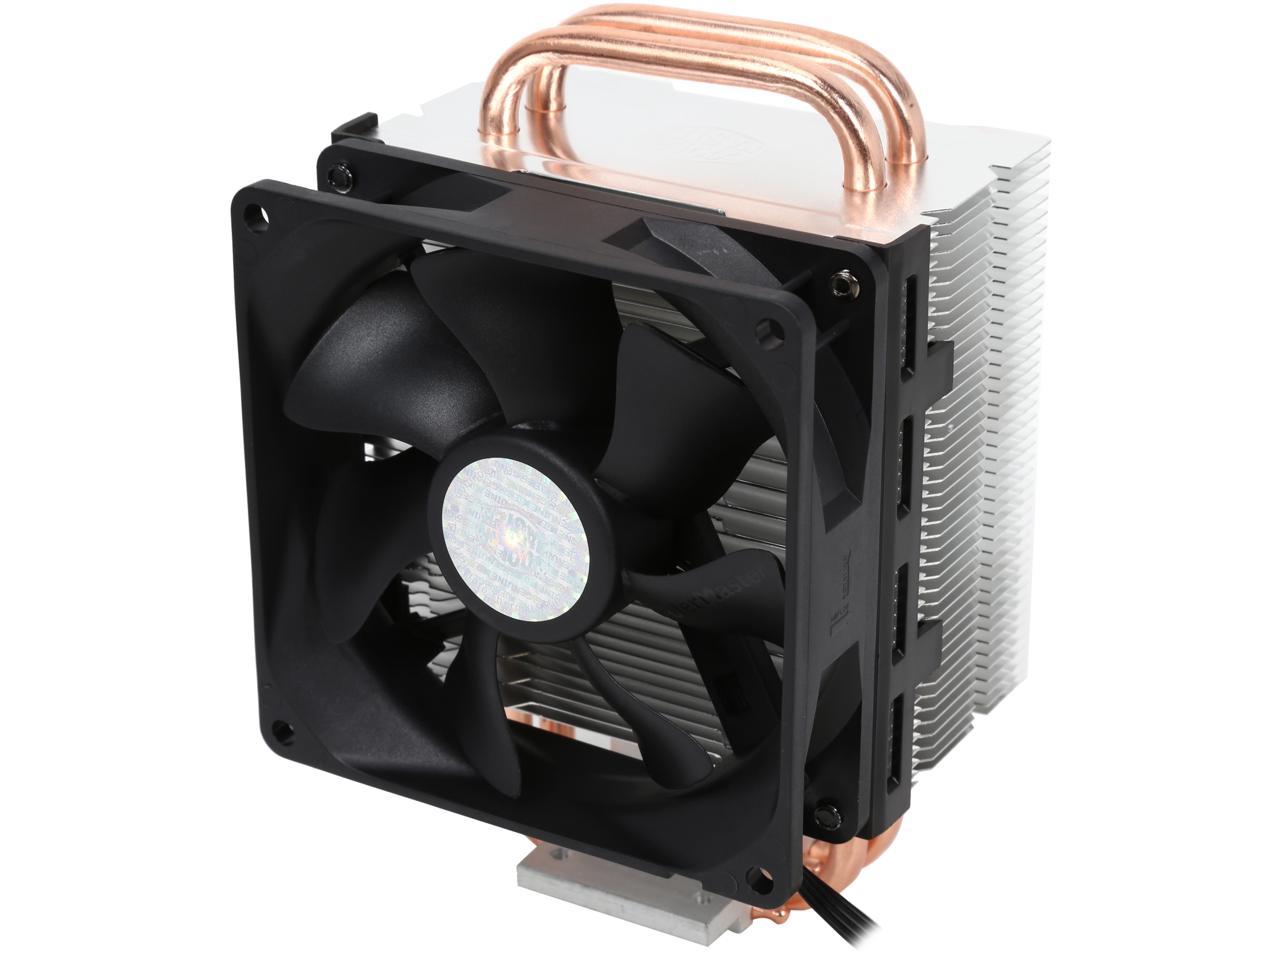 Cooler Master Hyper T2 RR-HT2-28PK-R1 CPU Fan For Intel LGA 1150/1156/1155/775 